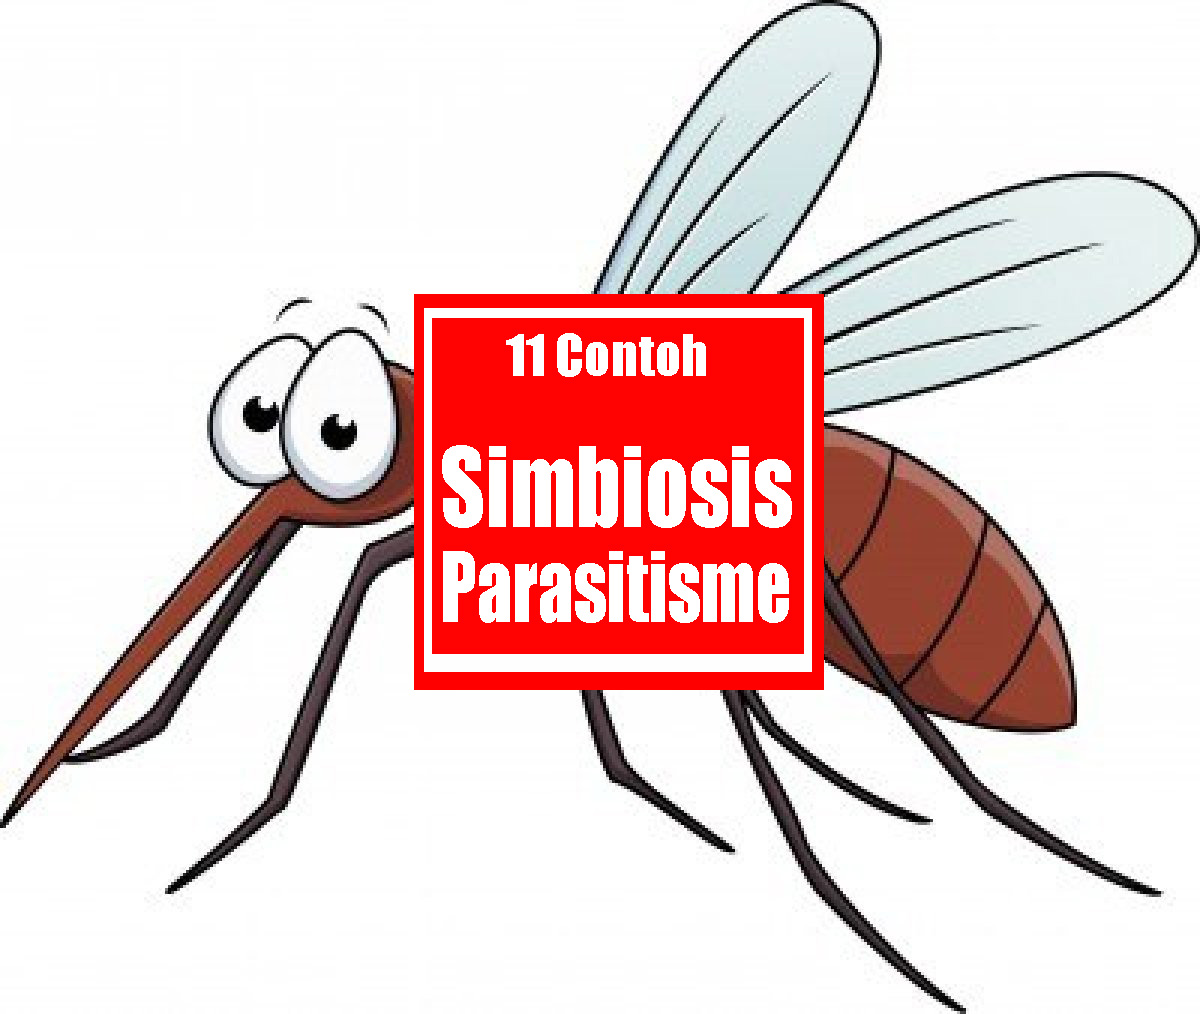 11 Contoh Simbiosis Parasitisme Lengkap Dengan Gambar